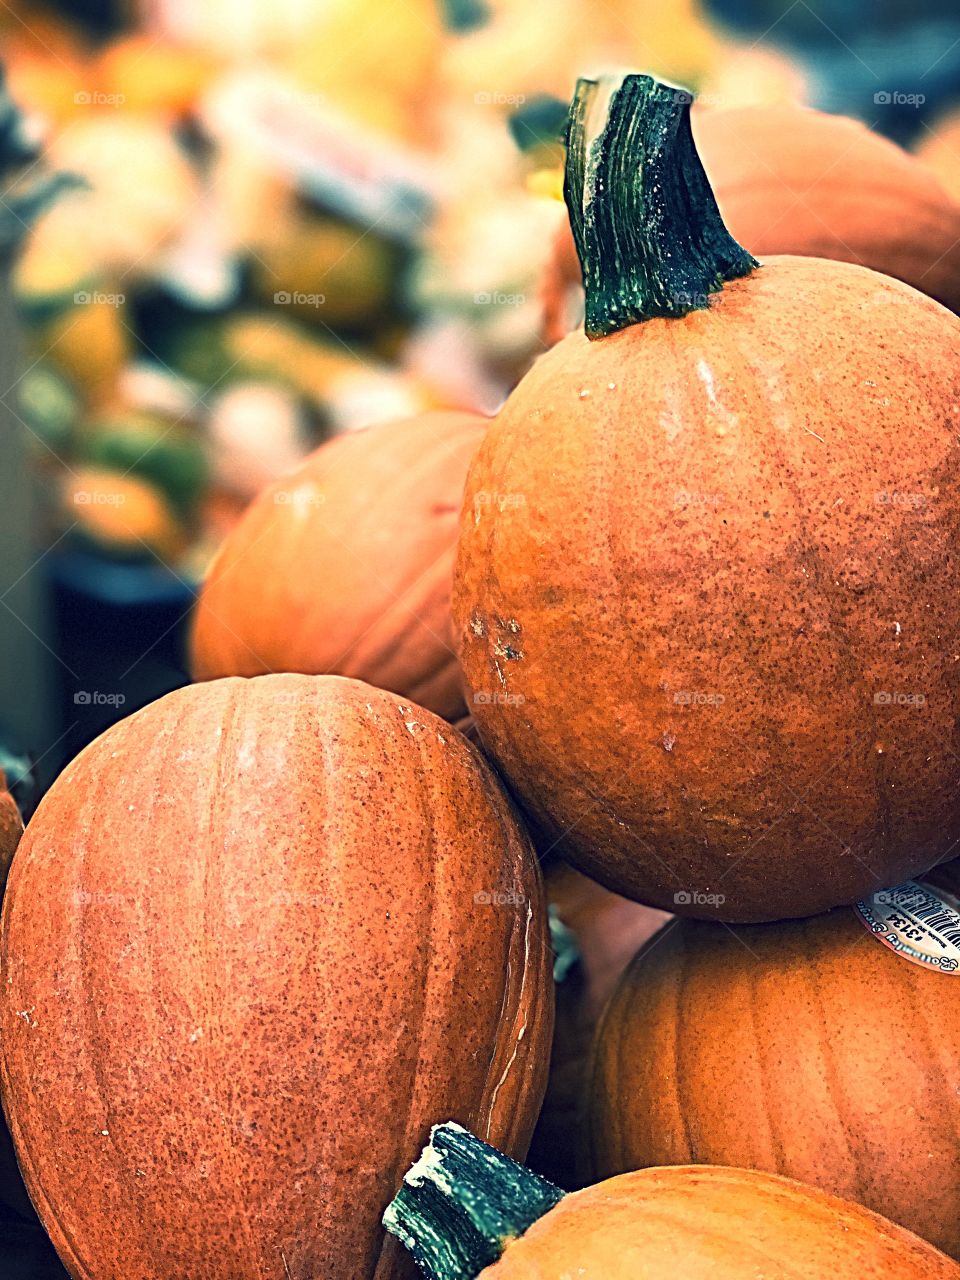 #Thanksgiving #october #holloween #pumpkin #trending 